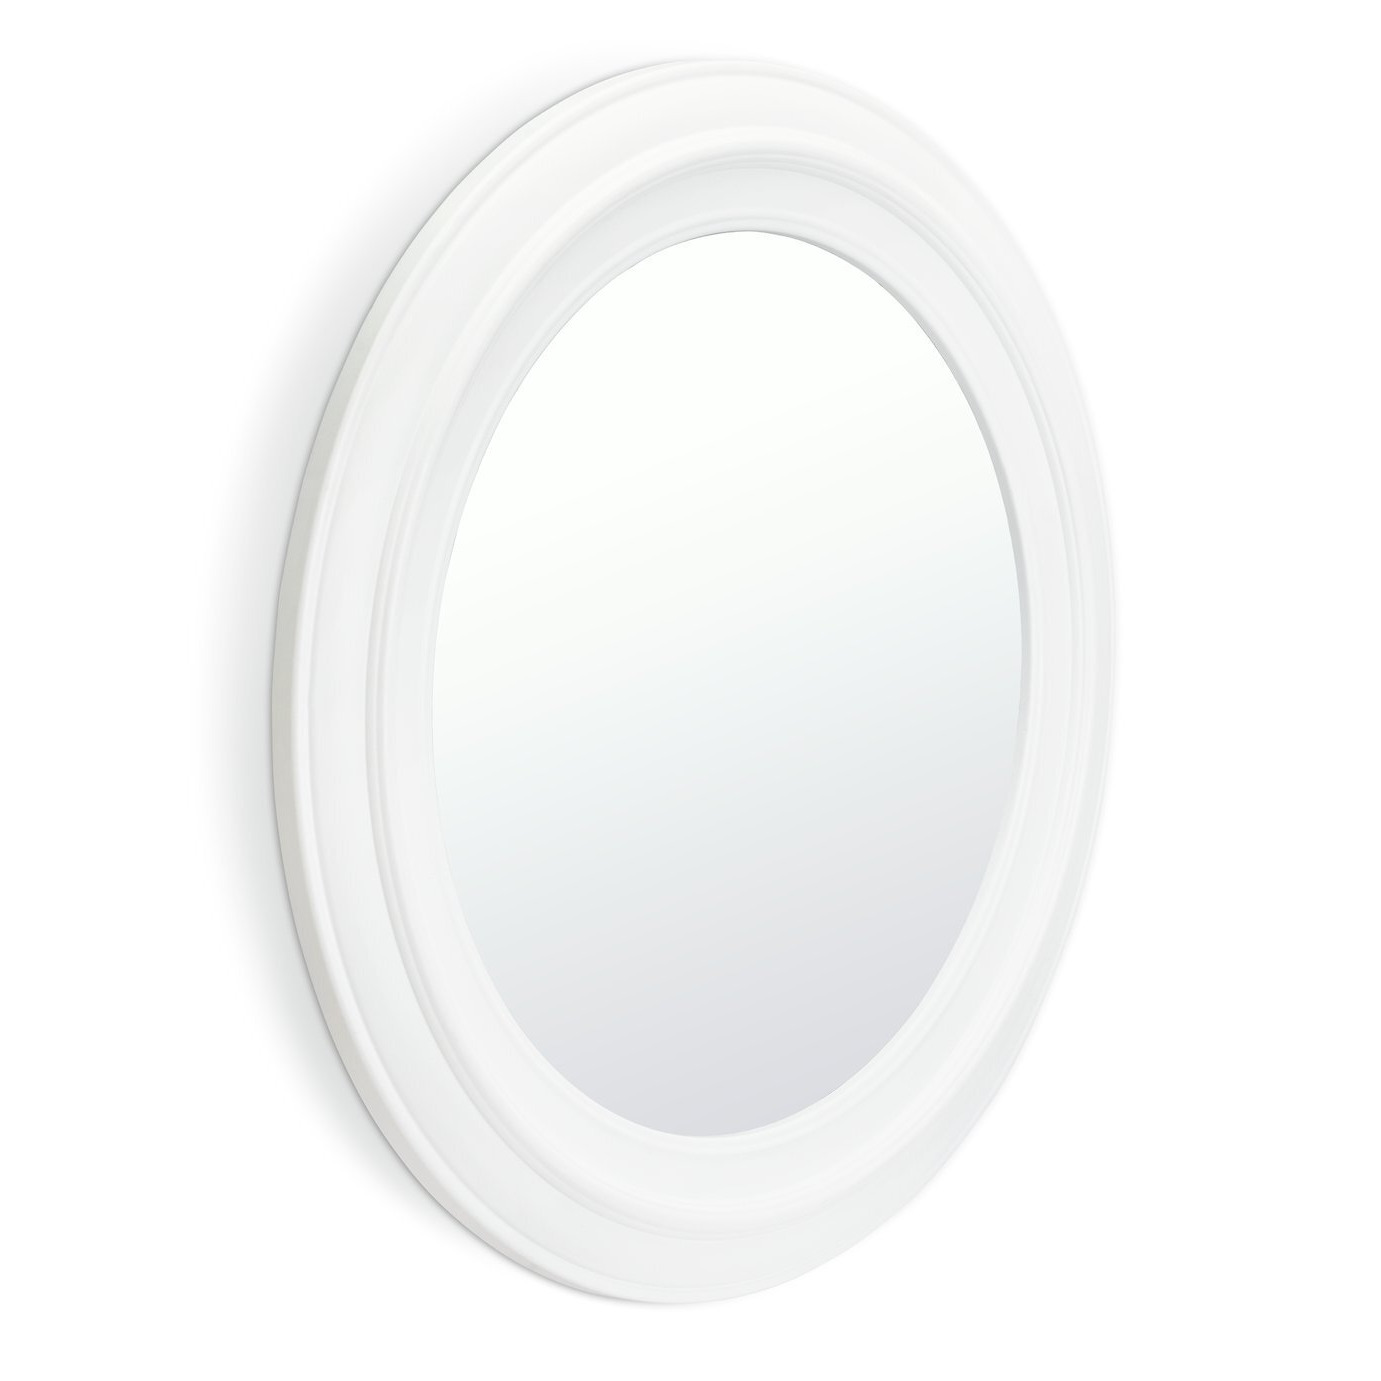 Innova Round Bathroom Mirror - White - image 1